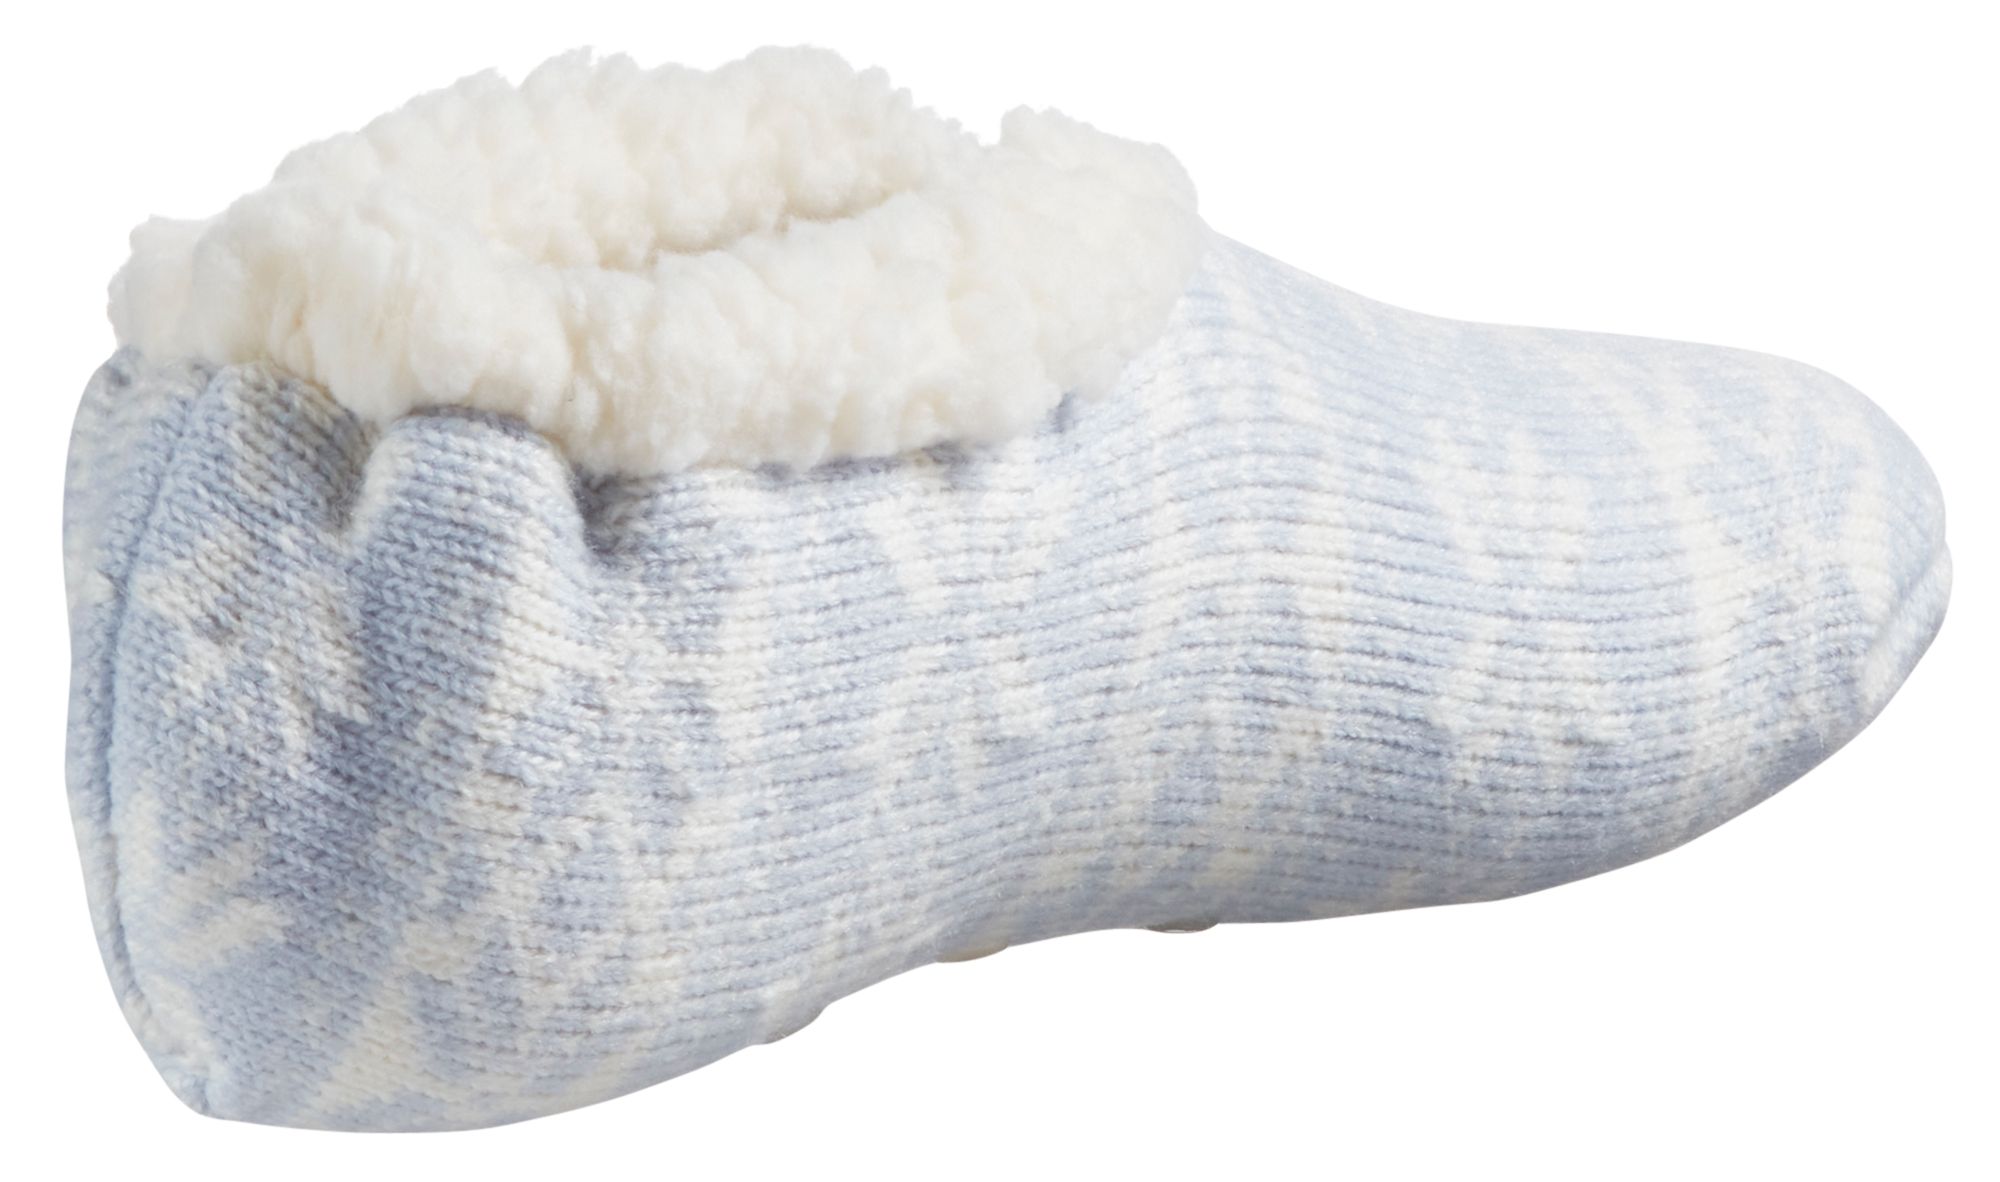 Northeast Outfitters Women's Cozy Cabin Snowflake Nordic Slipper Socks